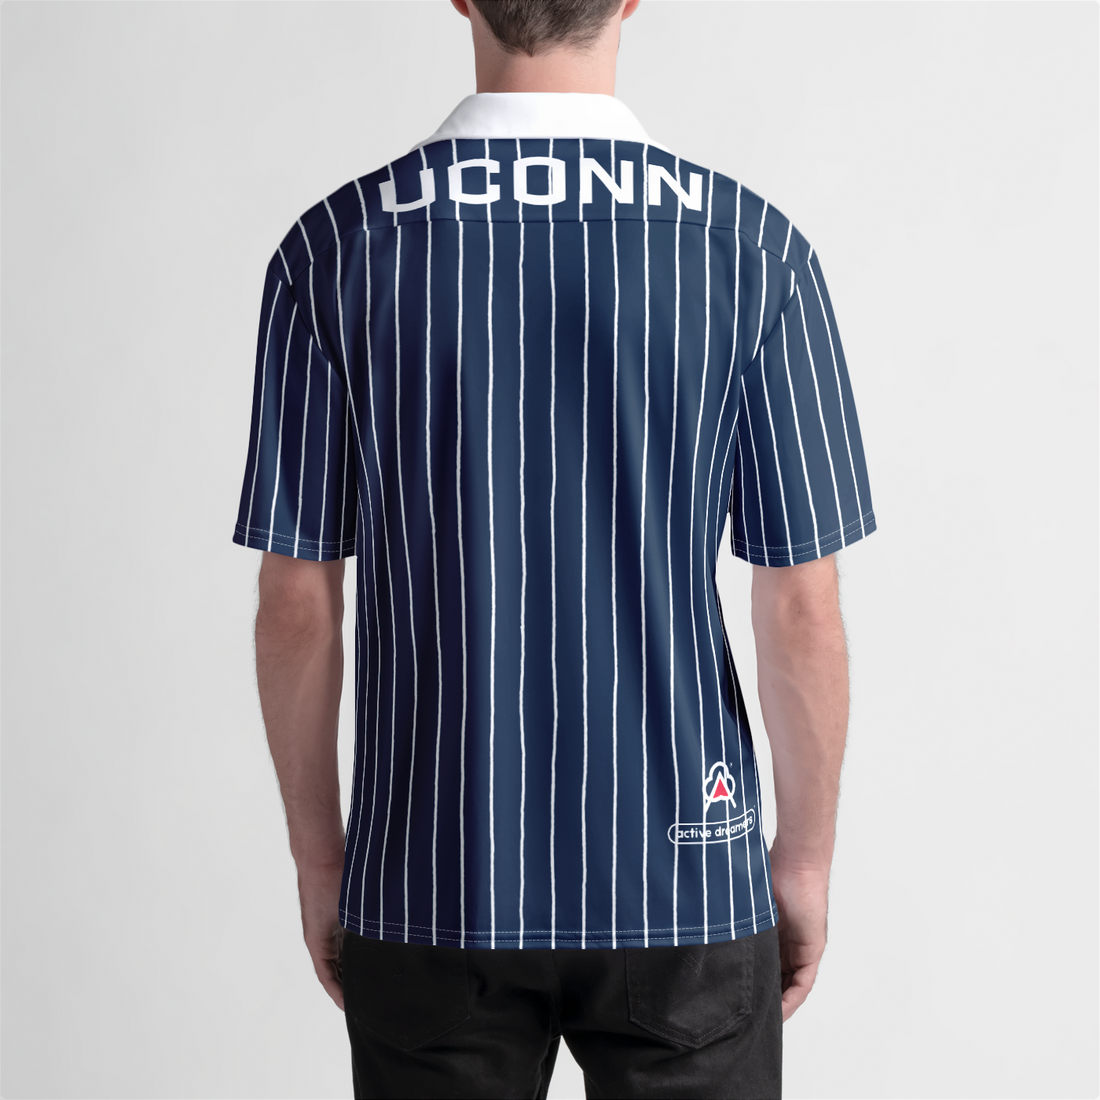 UCONN Beach Shirt